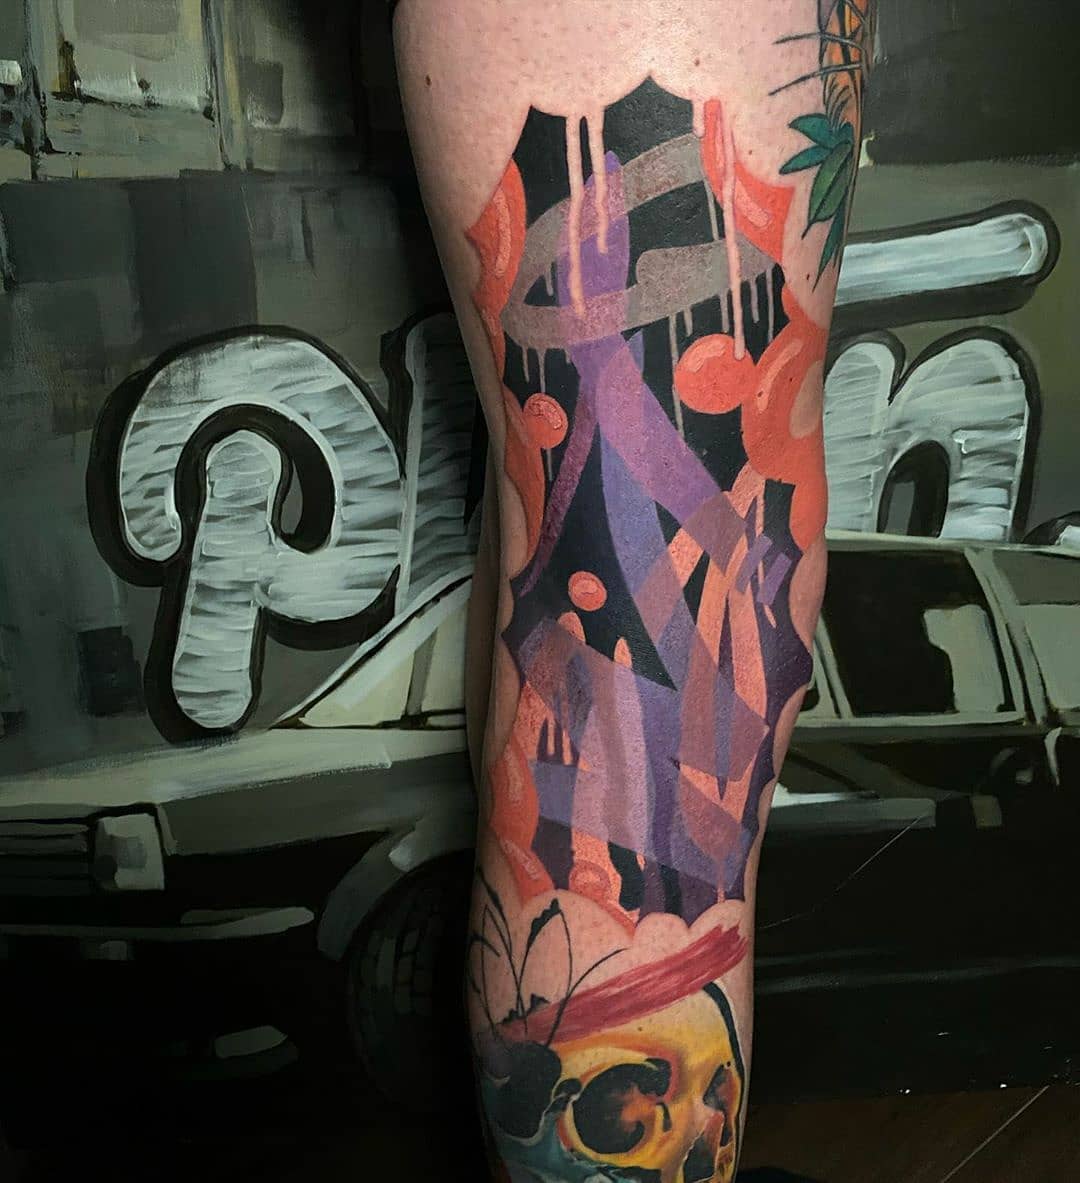 25 Graffiti Tattoos That Celebrate Street Art and Style